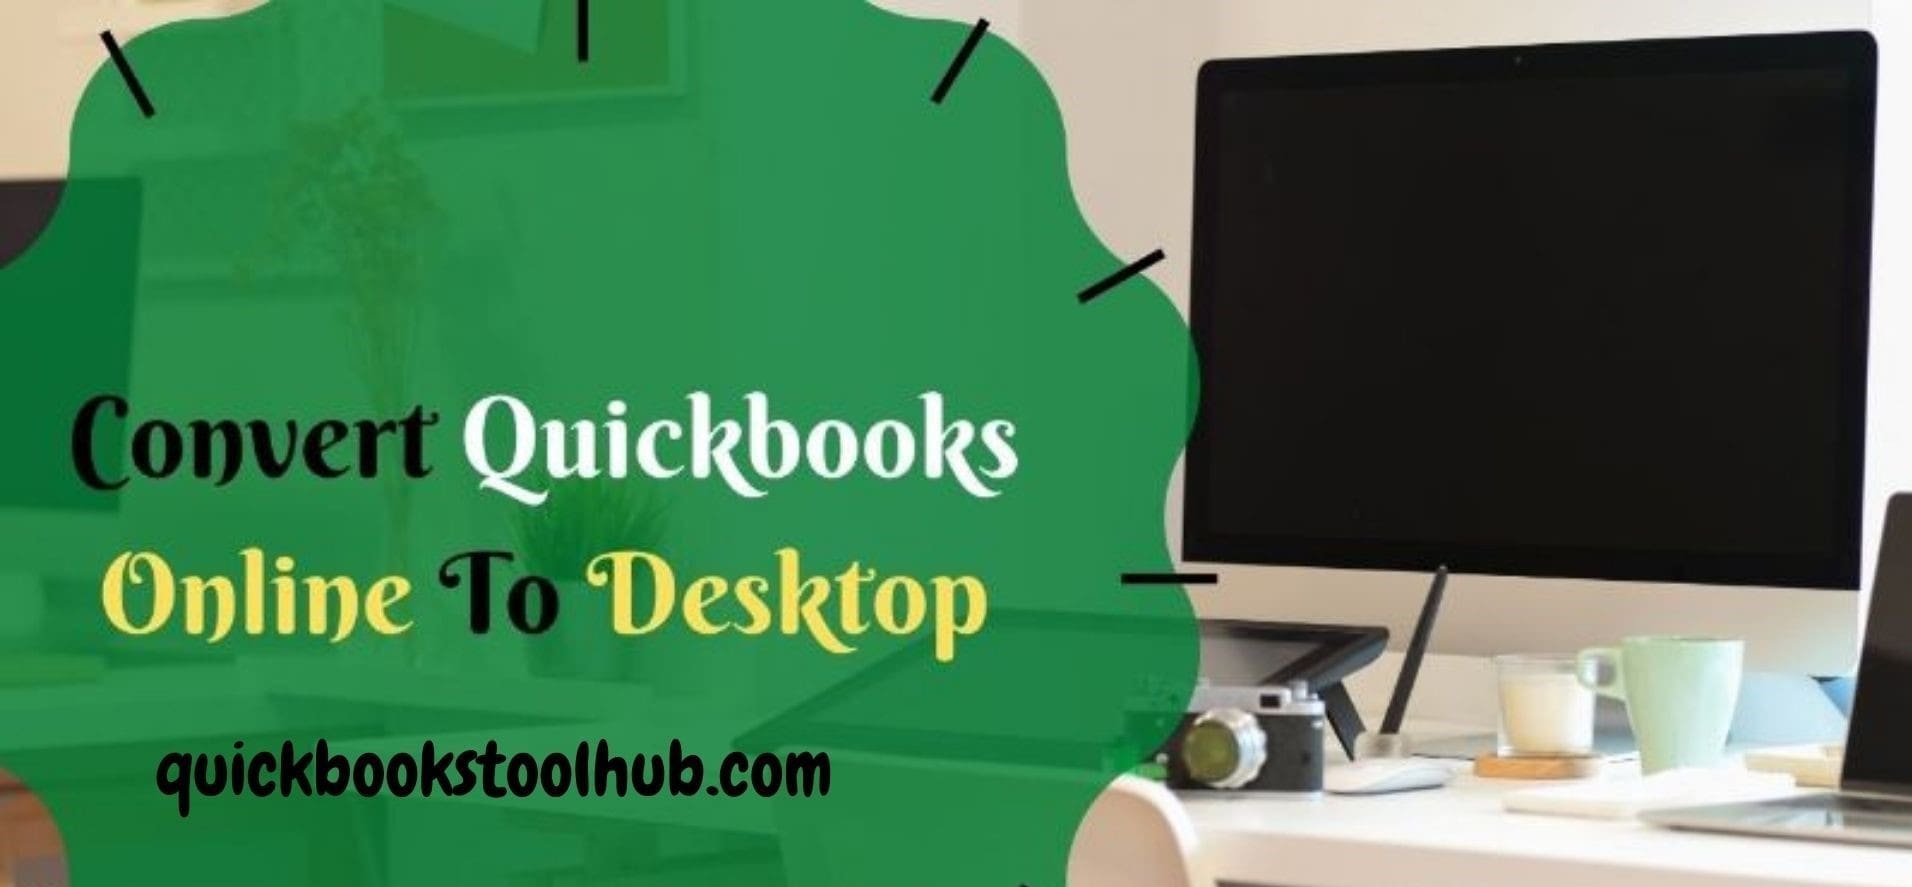 Convert Quickbooks Online to Desktop (Easy Steps)